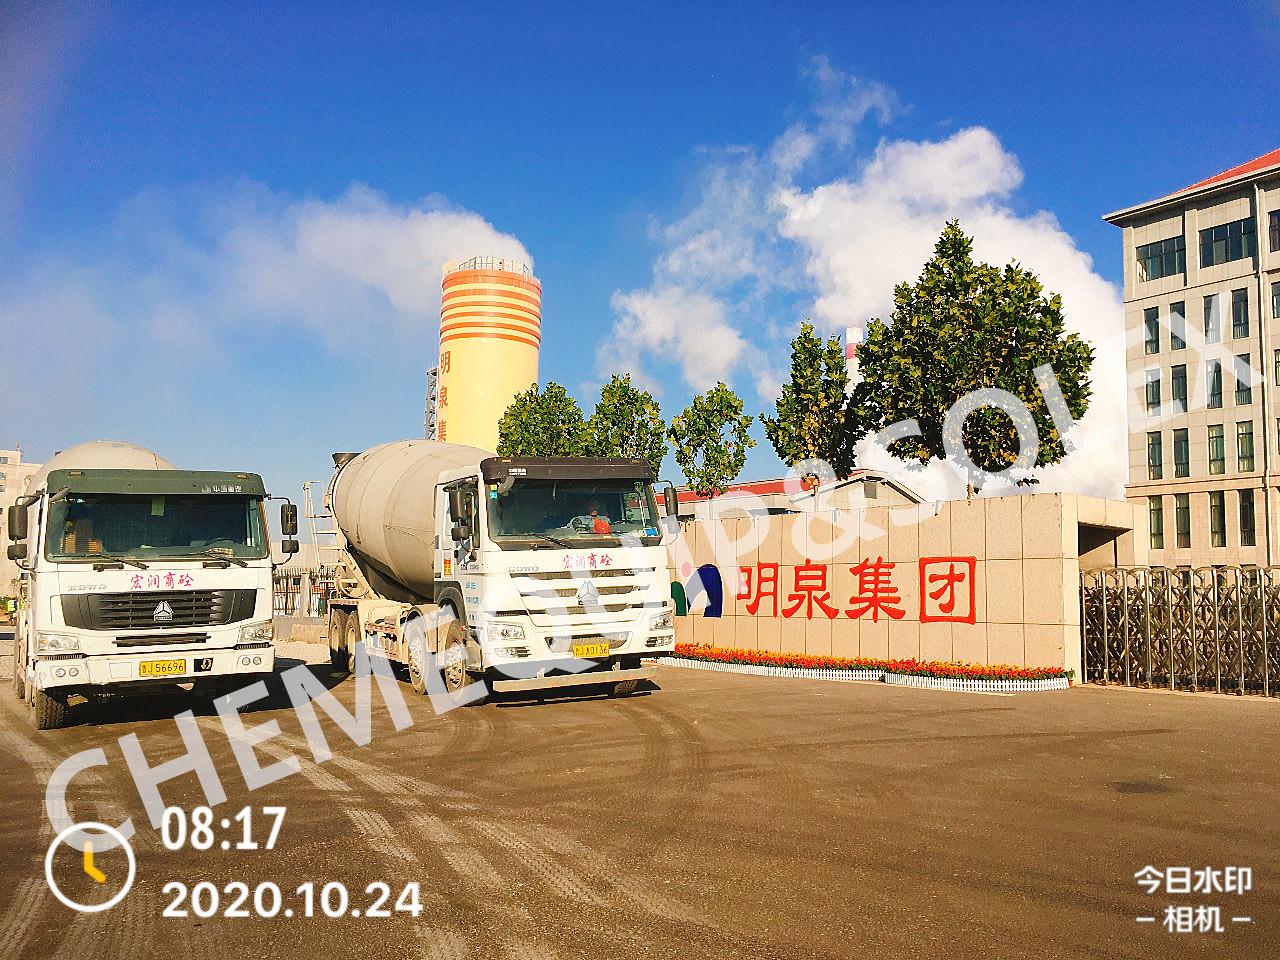 High Efficiency Urea Cooler with Plate Heat Exchanger is Installing in Shandong